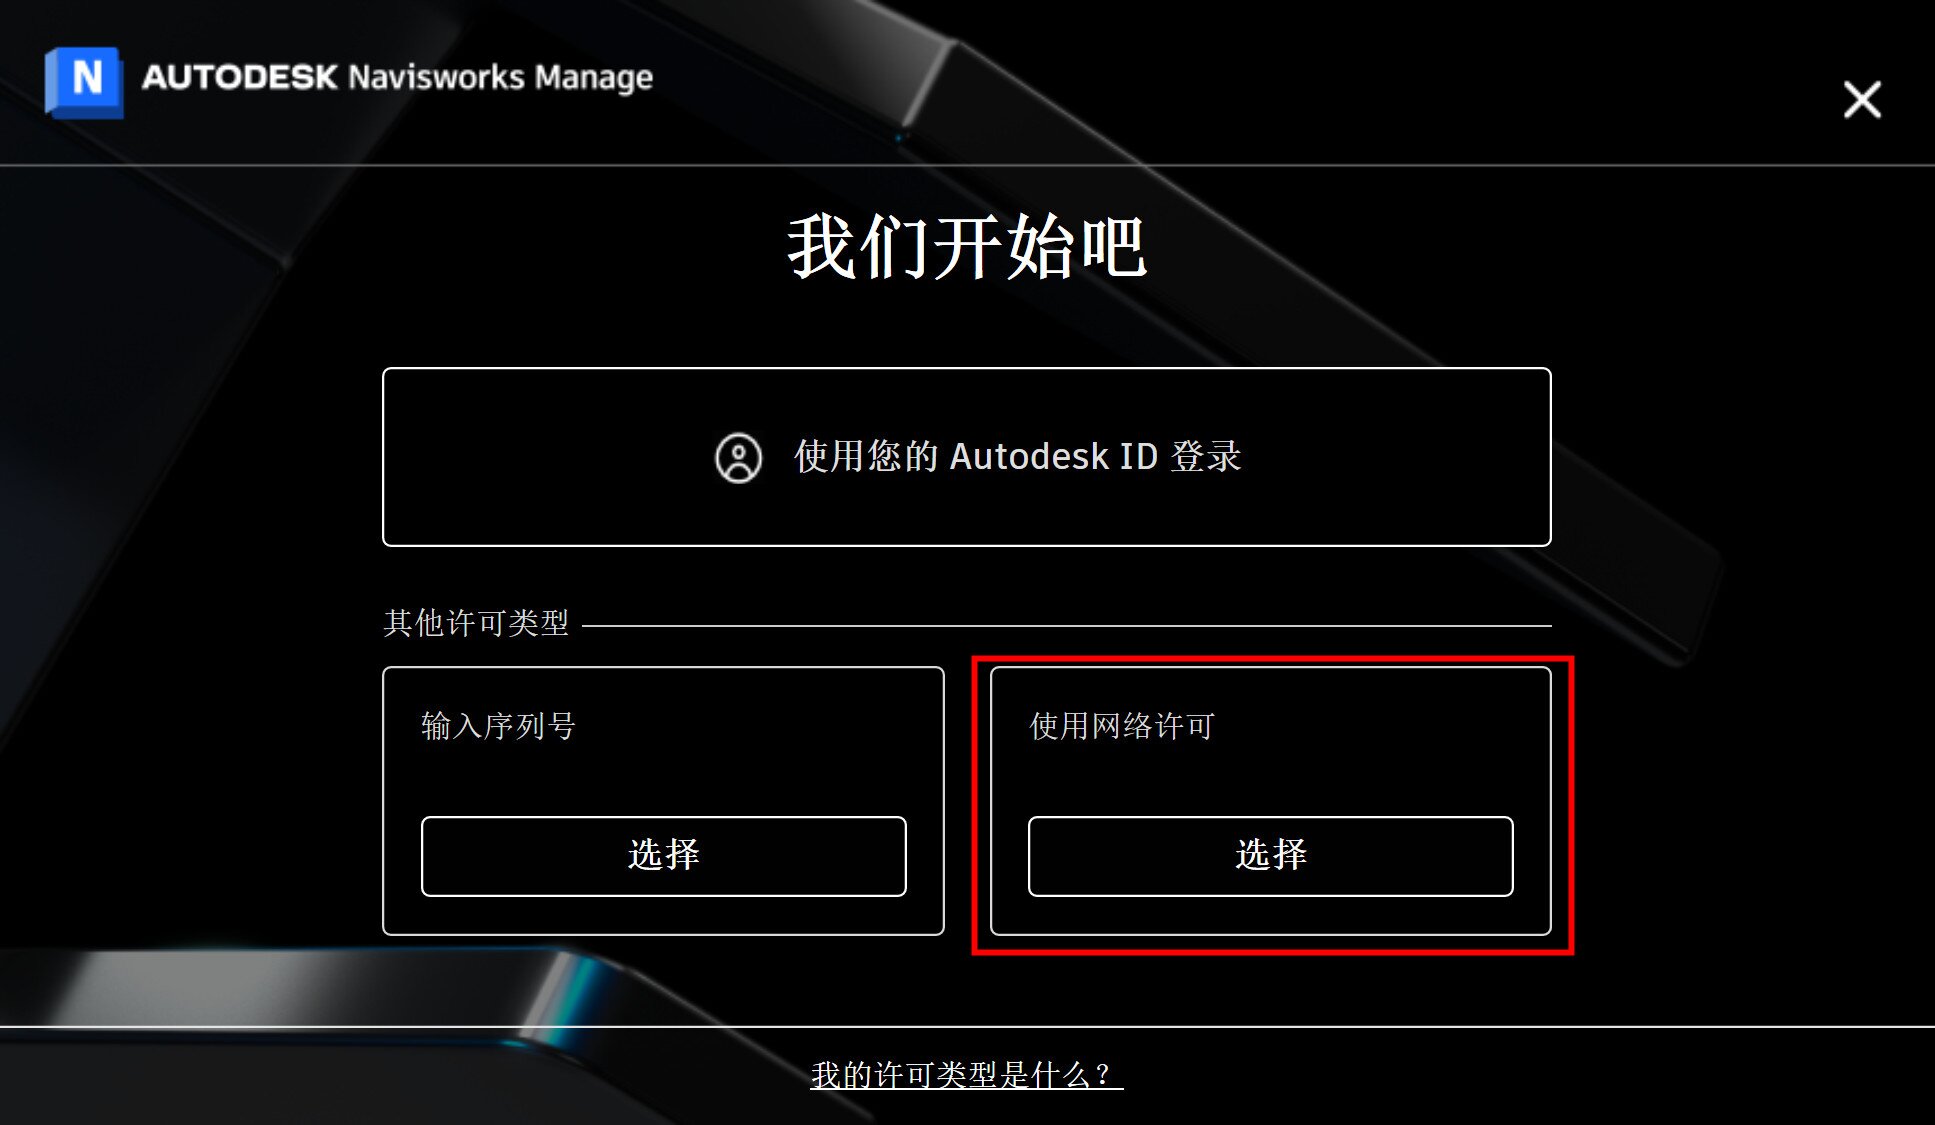 Autodesk Navisworks Manage 2024 (建筑工程项目模拟和协作软件)中文永久使用下载